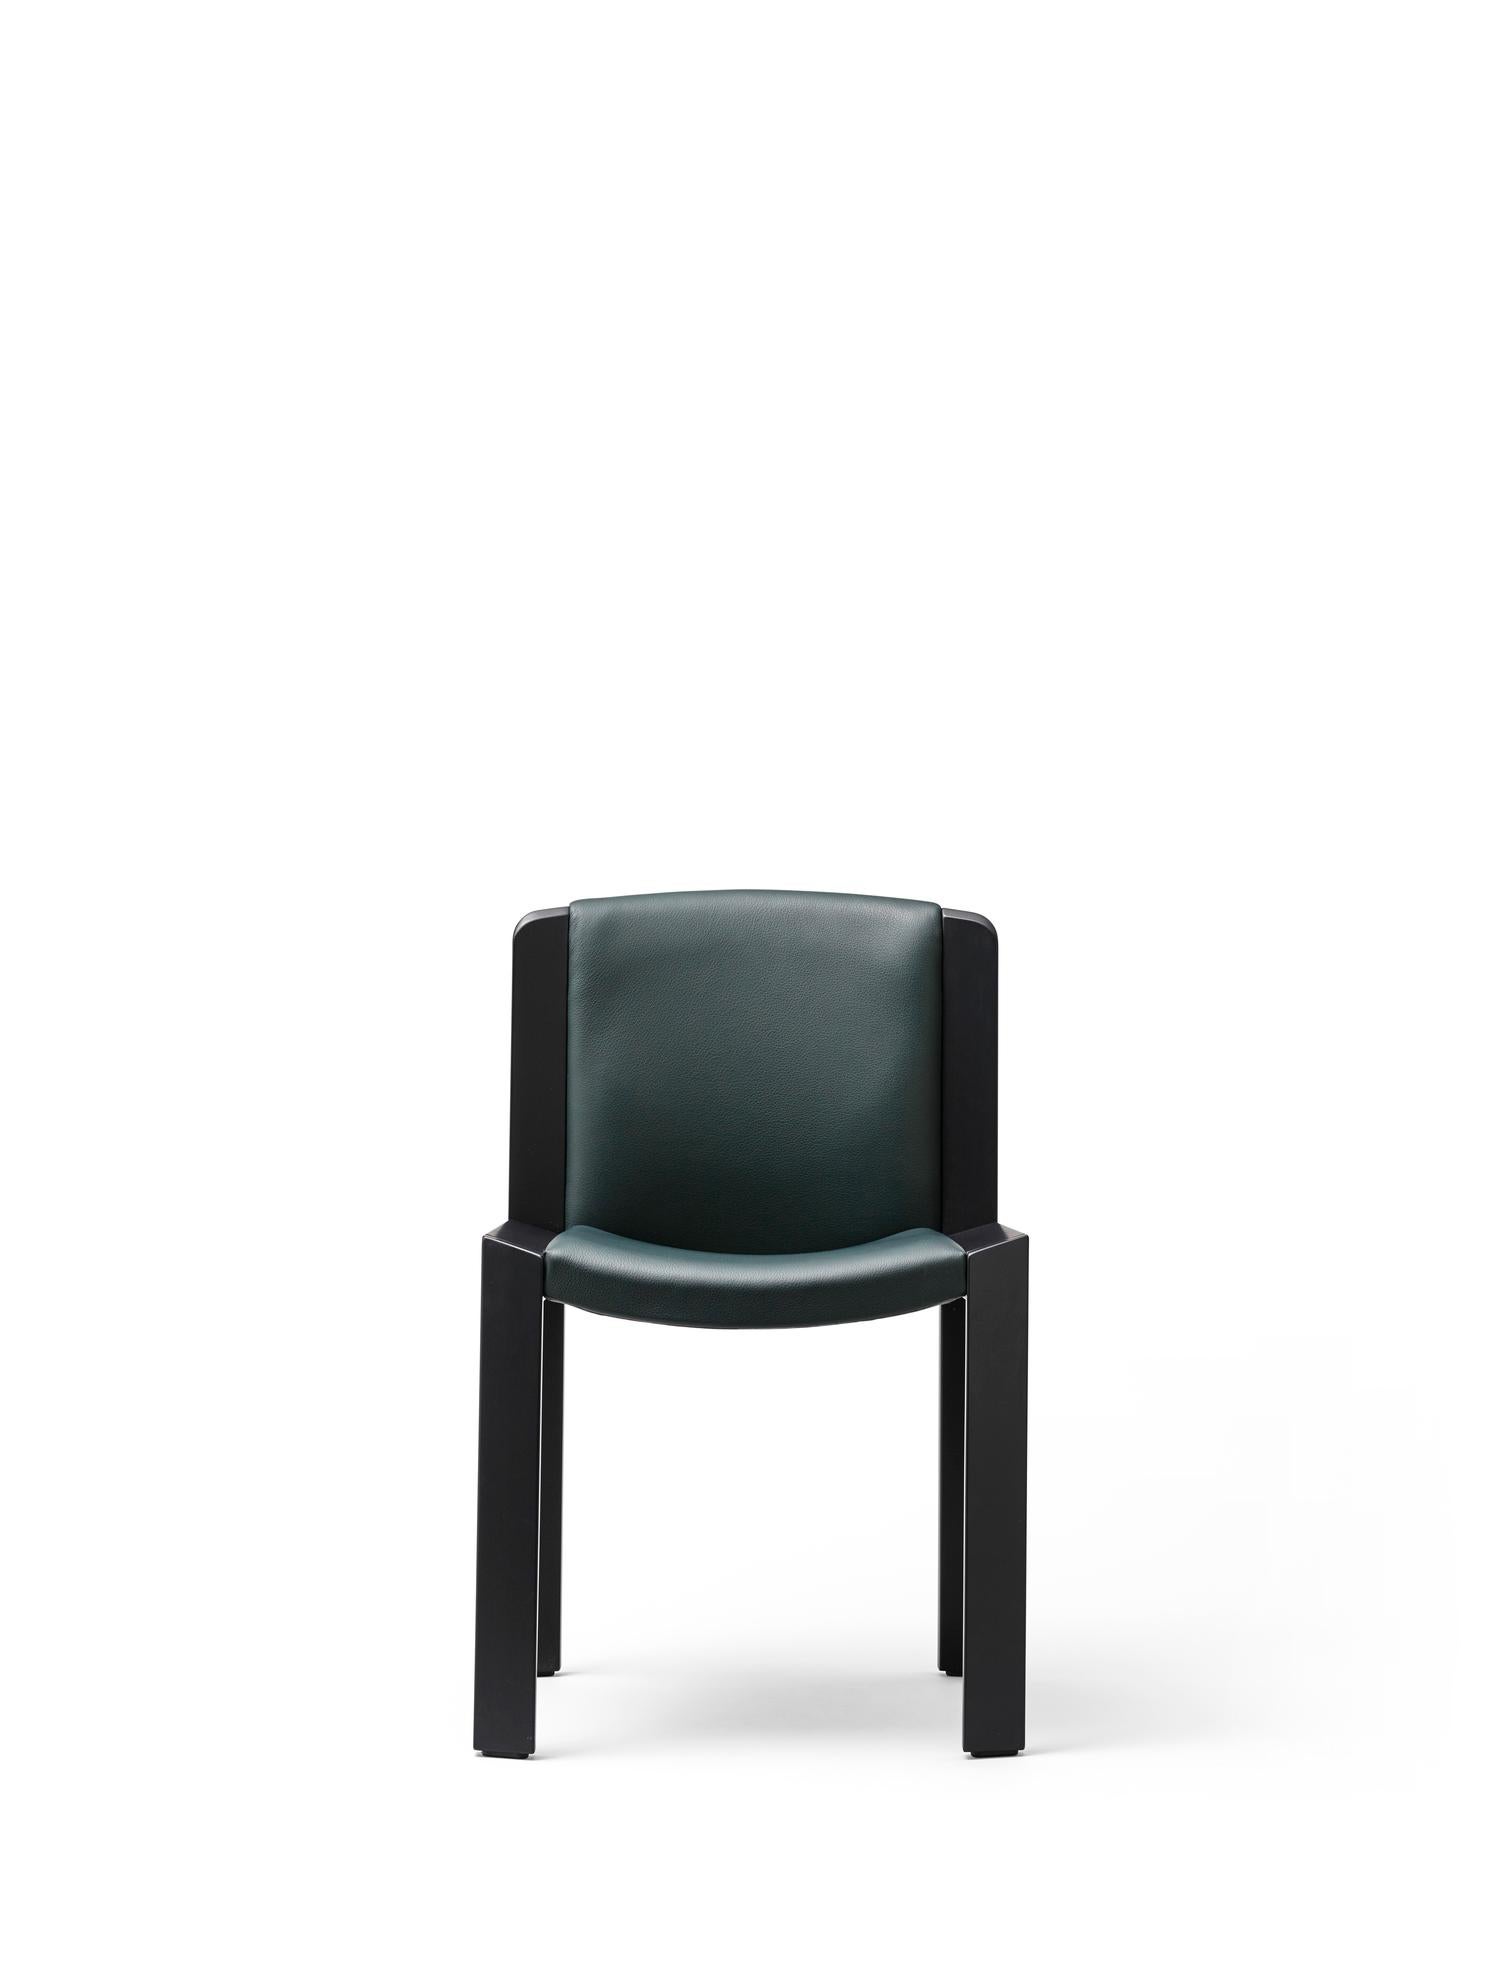 Danish Set of Four Joe Colombo 'Chair 300' Wood and Sørensen Leather by Karakter